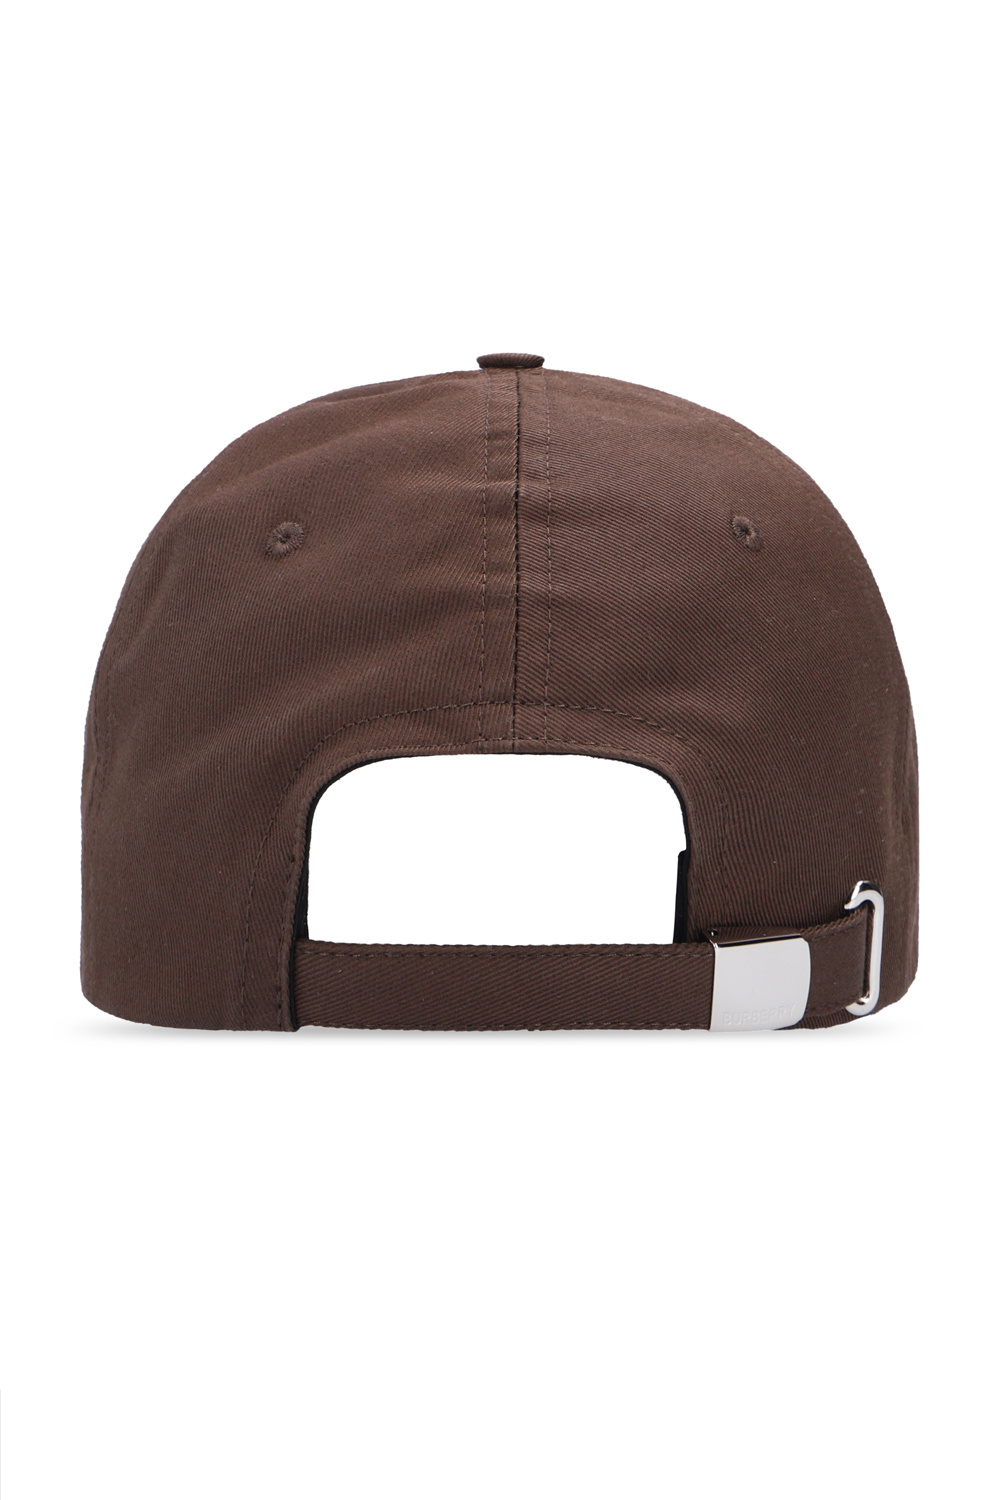 burberry 8ml Baseball cap